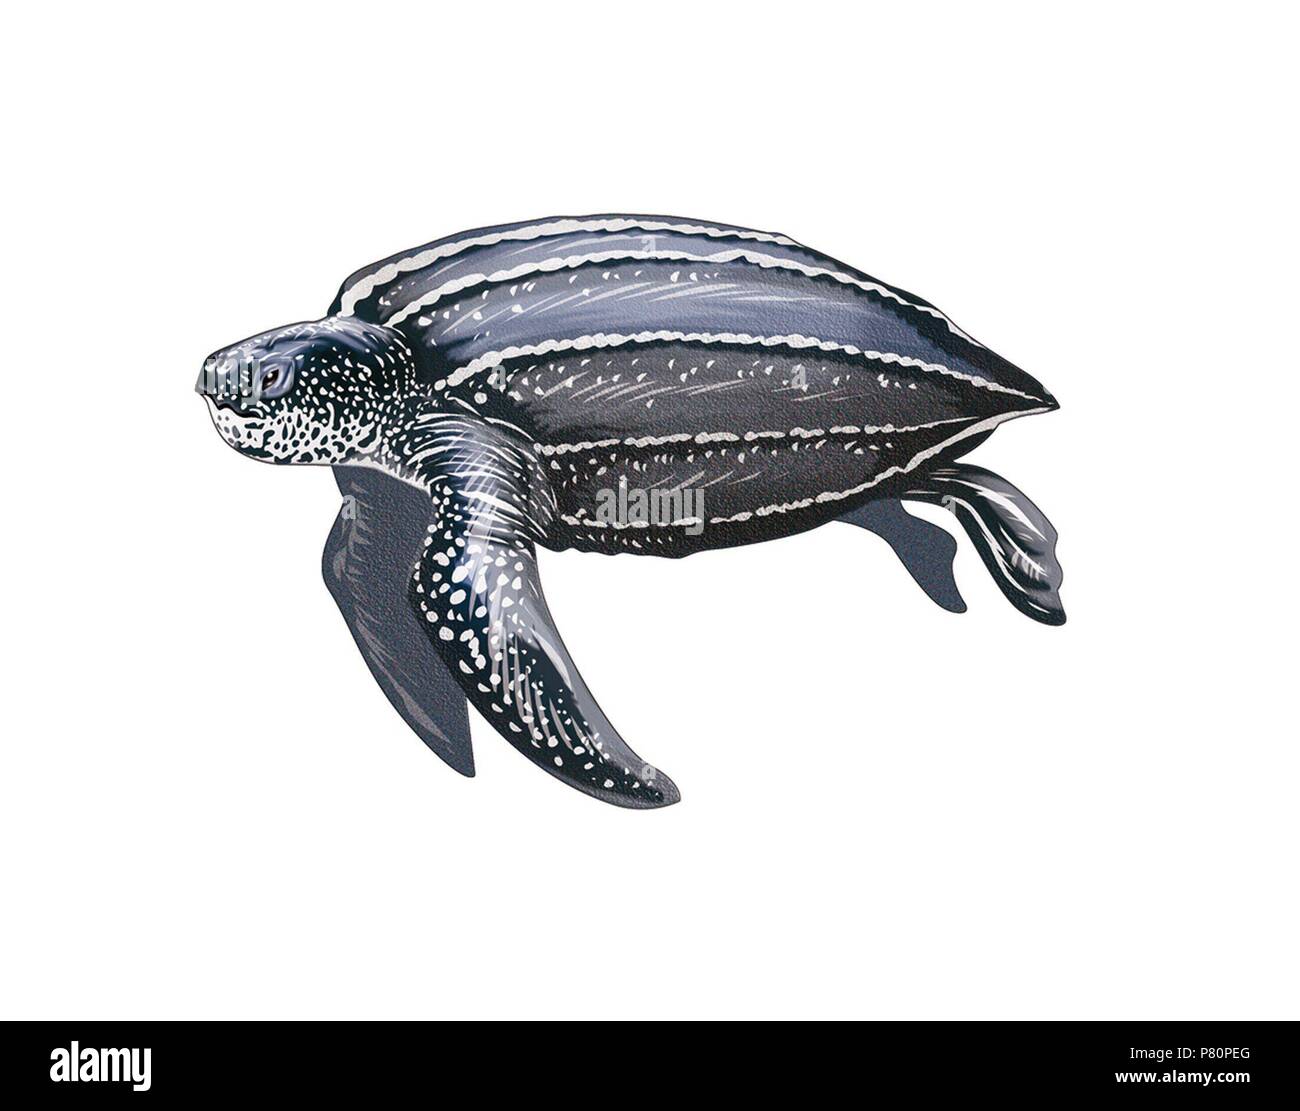 Leatherback turtle. Stock Photo